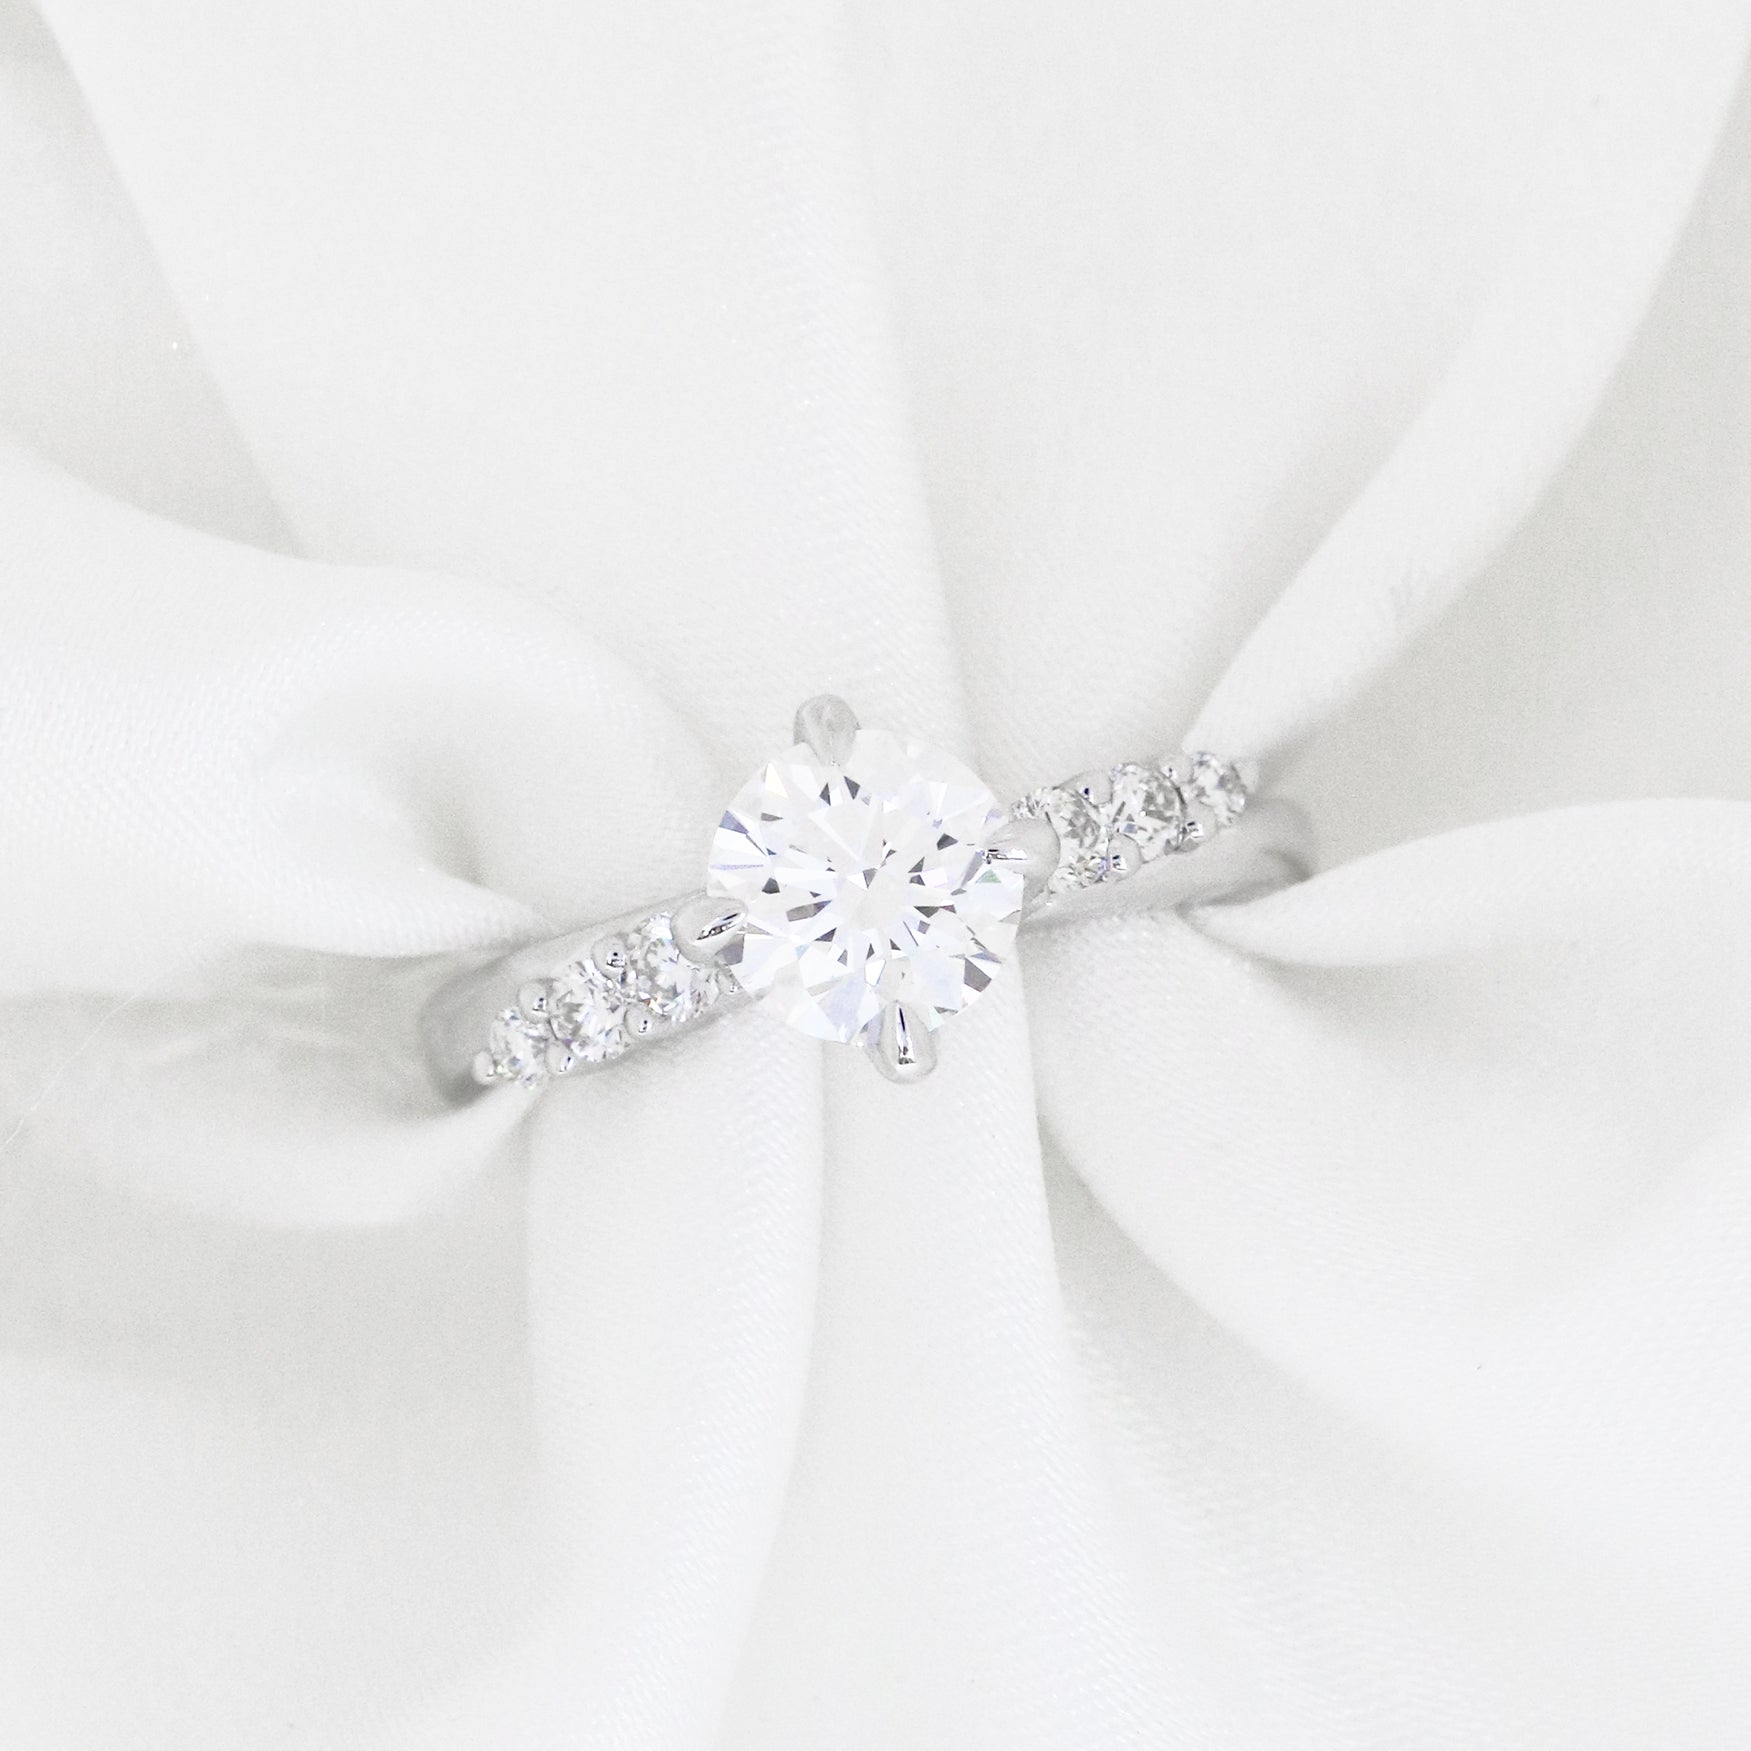 Daphne Vintage 18k White Gold 4-Prong Engagement Ring Setting 18k白金四爪復古求婚鑽石戒指款式